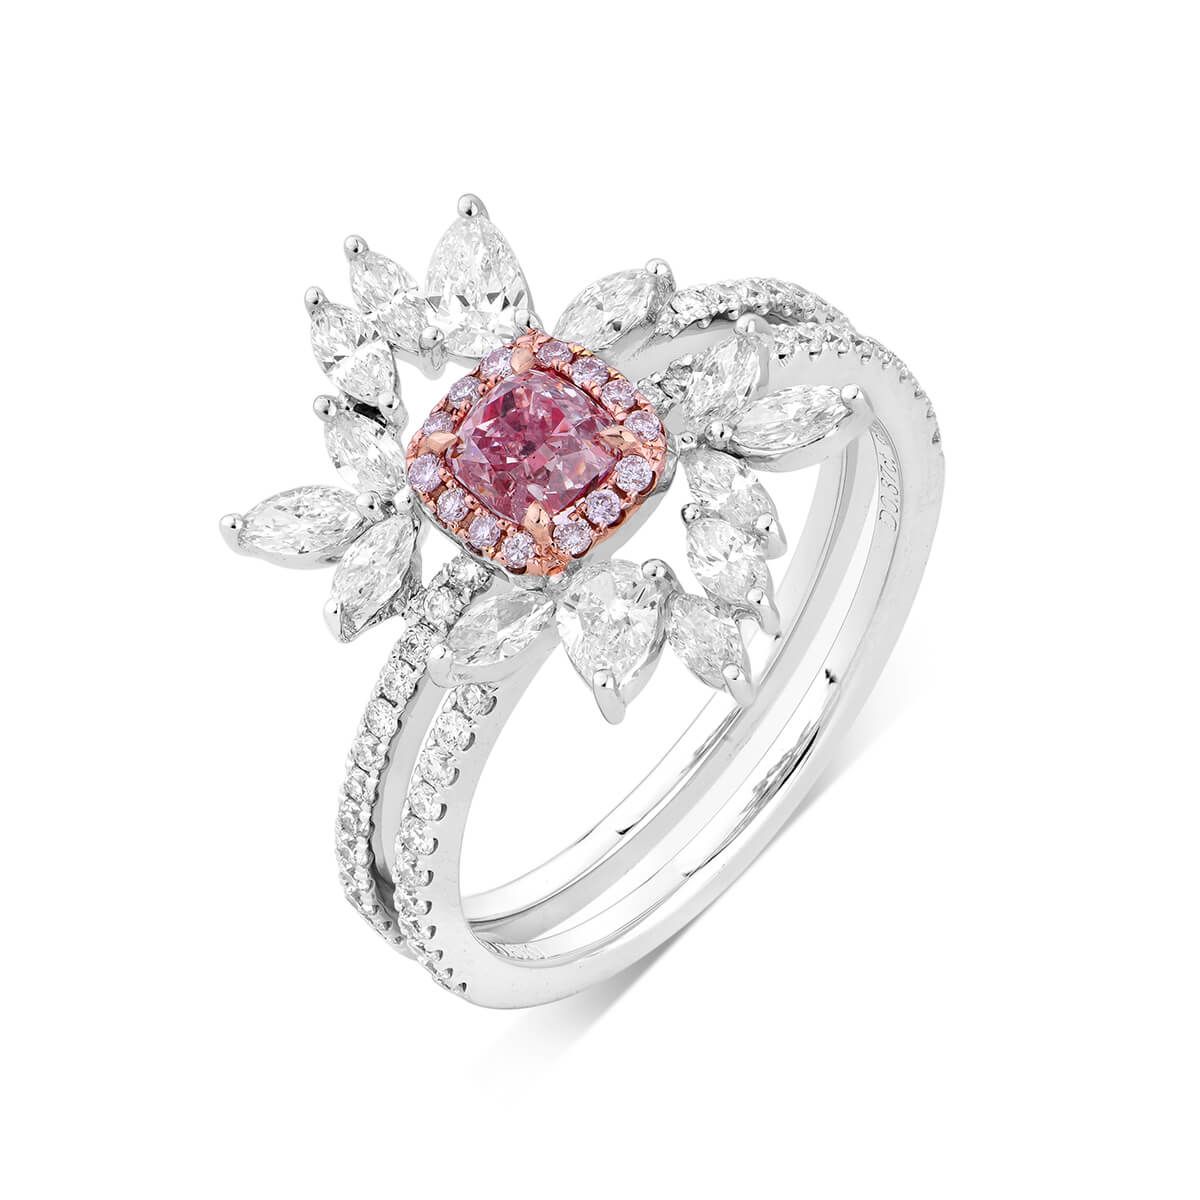 Very Light Pink Diamond Ring, 1.27 Ct. TW, Cushion shape, GIA Certified, 2181725710